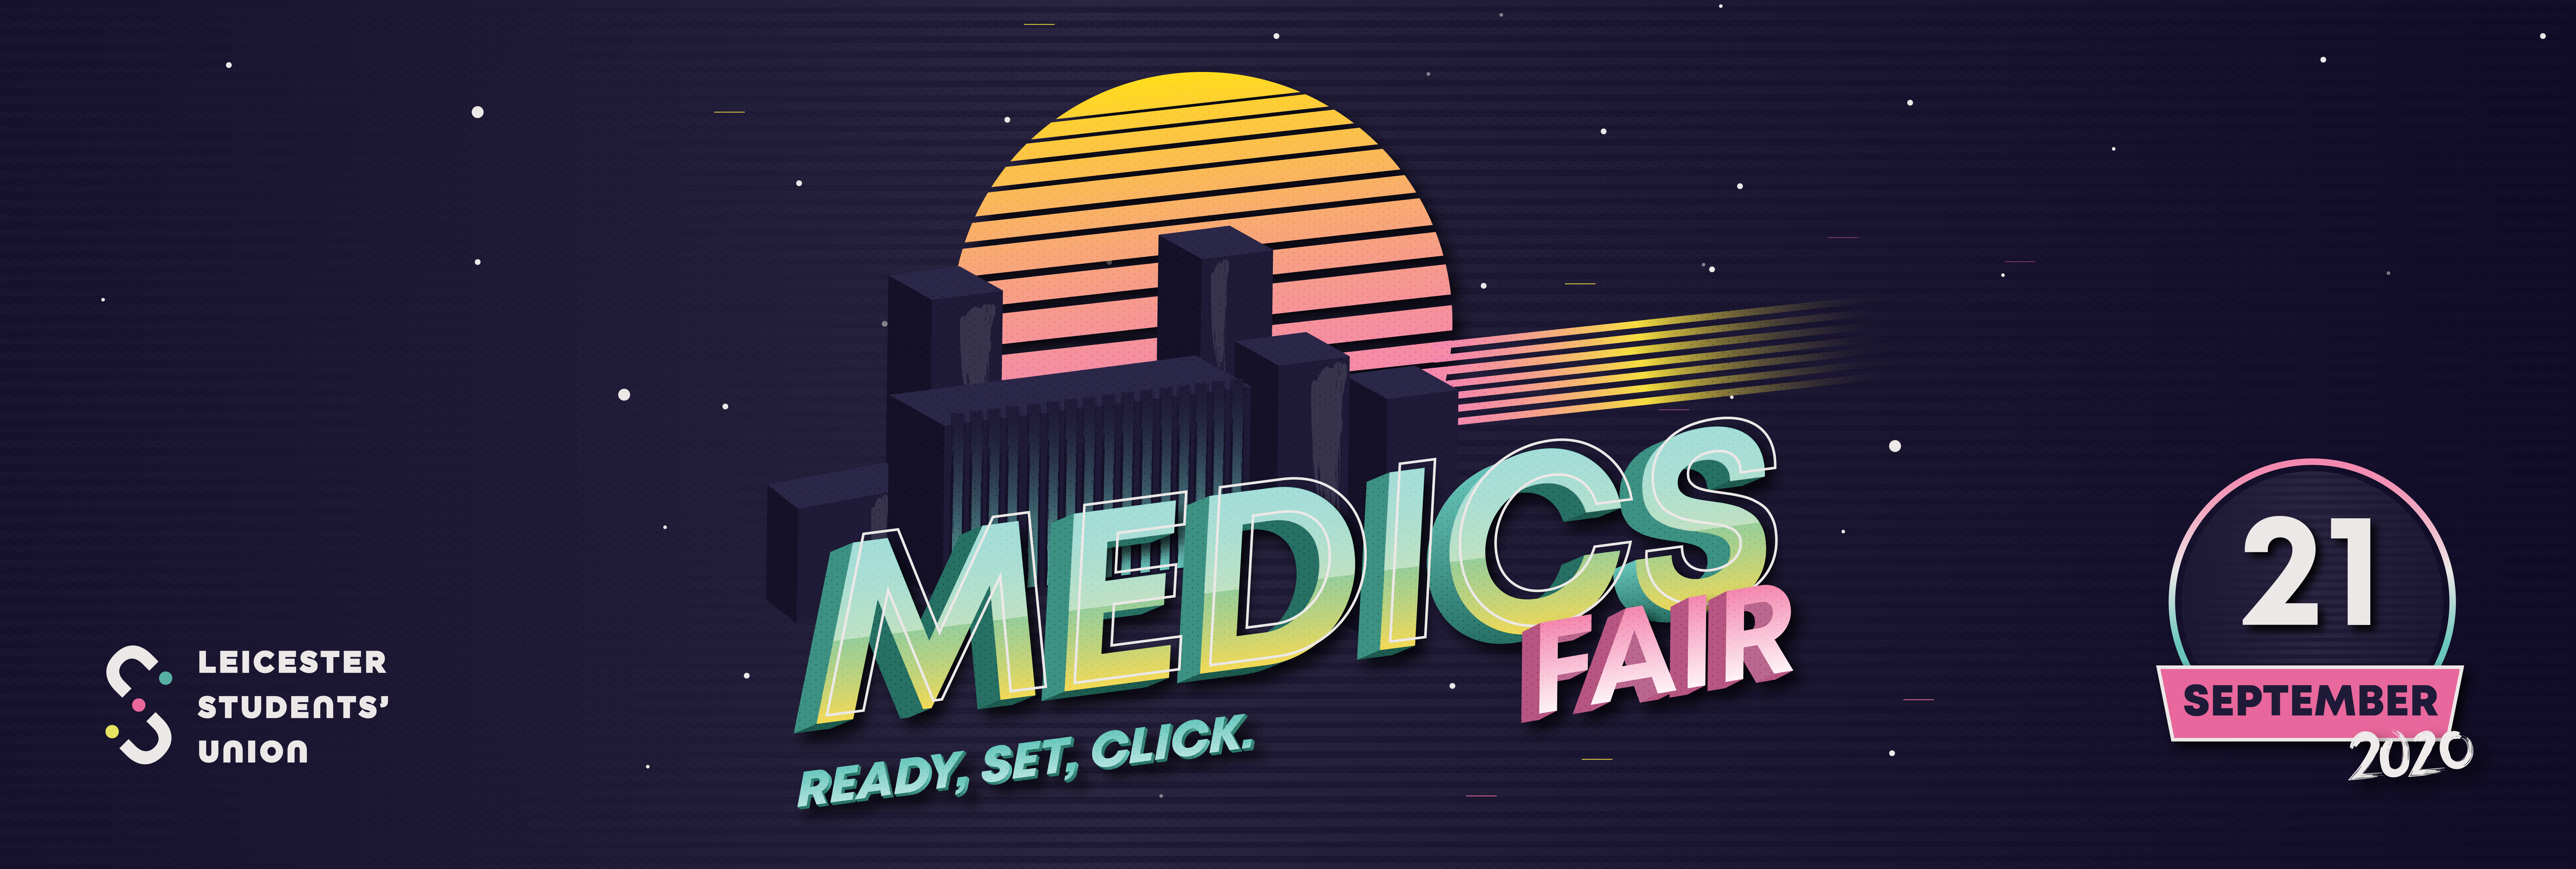 Medics Fair: Ready, Set, Click, 21 September 2020